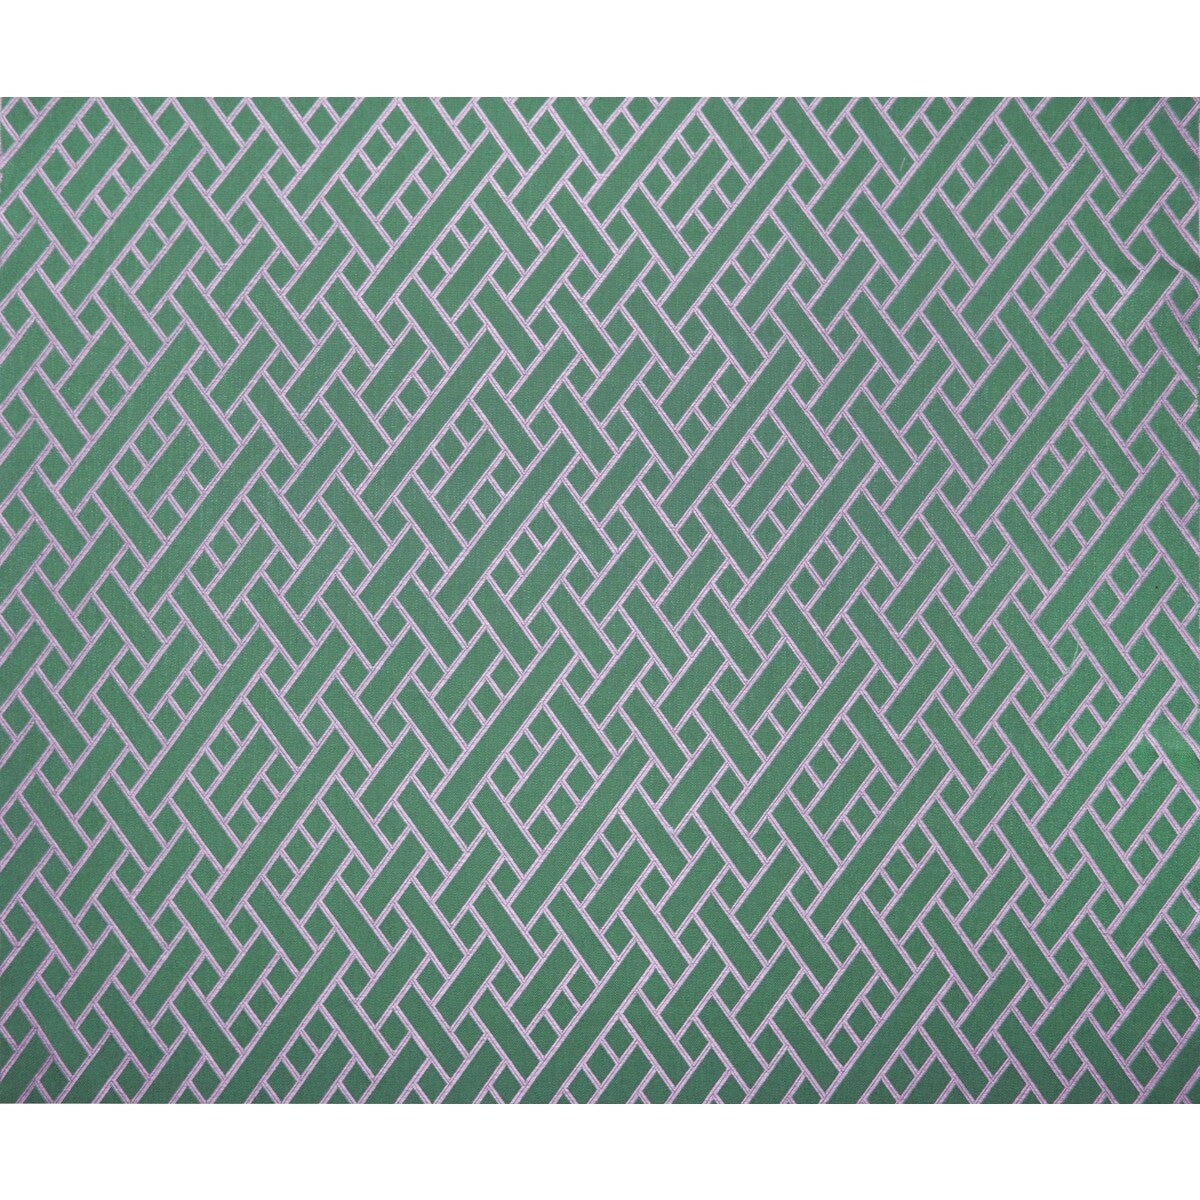 Nairobi fabric in esmeralda color - pattern GDT5374.7.0 - by Gaston y Daniela in the Gaston Africalia collection